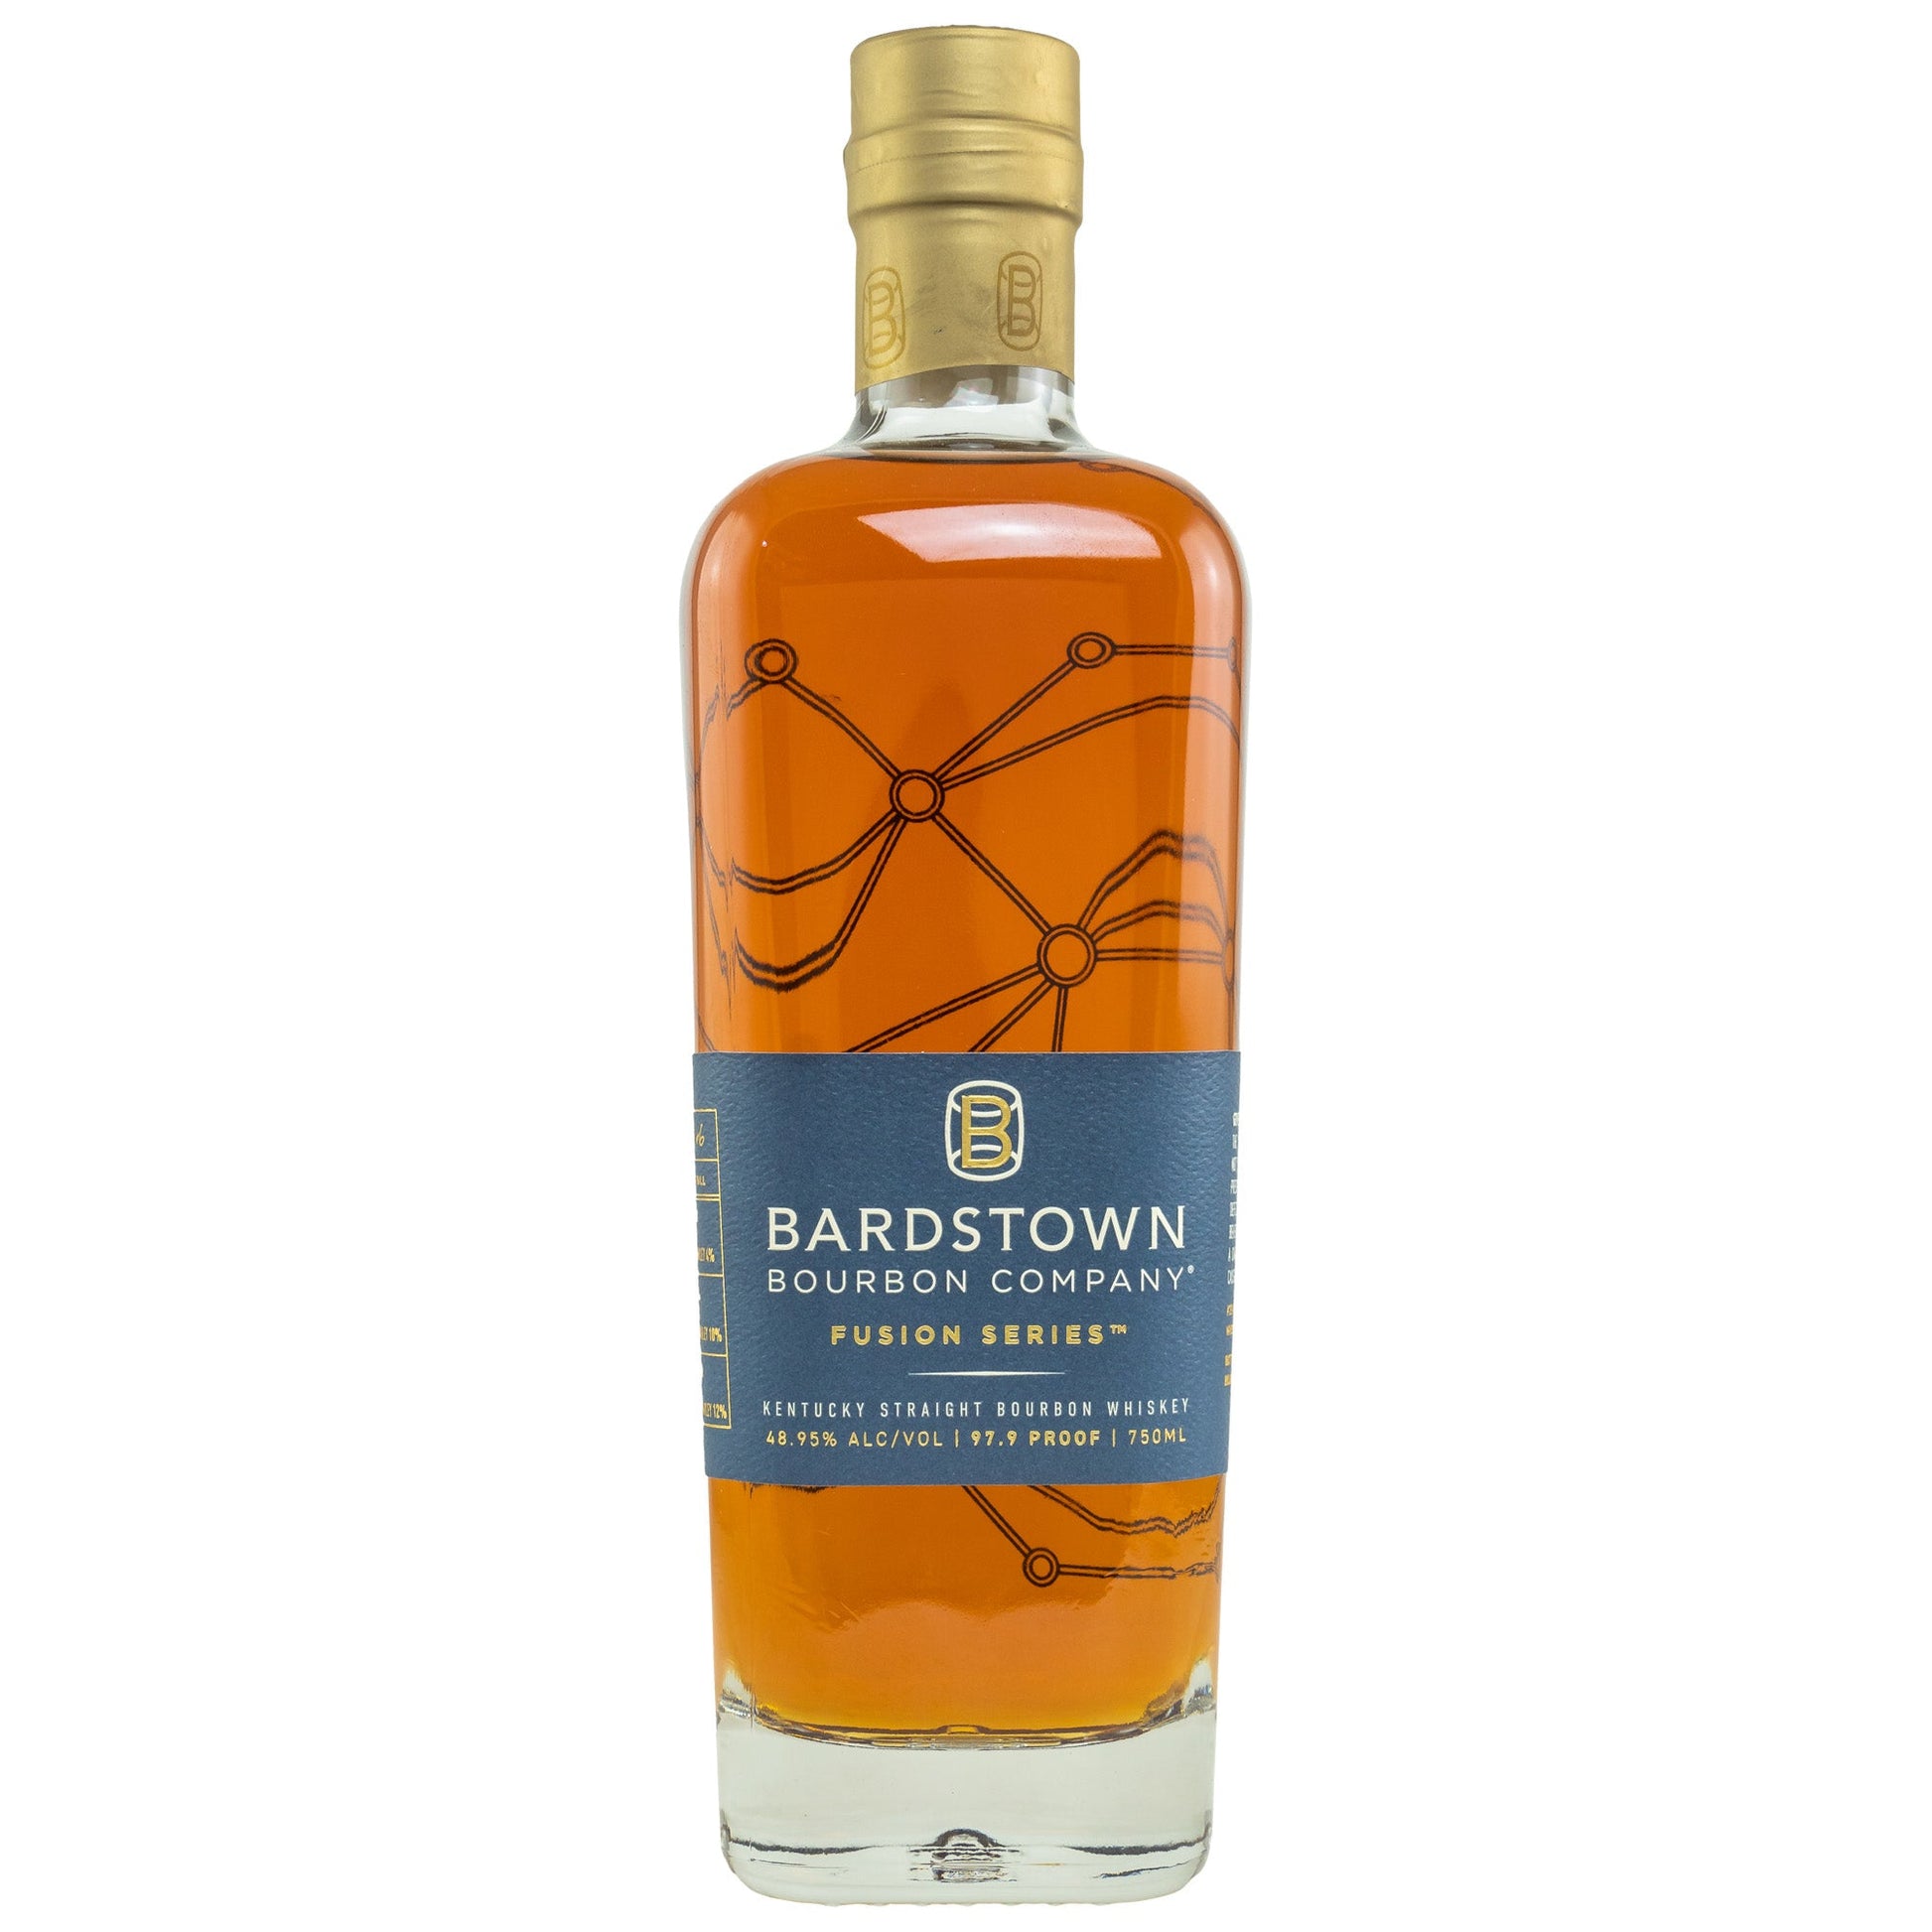 Bardstown | Fusion Series #6 | Kentucky Straight Bourbon | 0,75l | 48,95%GET A BOTTLE